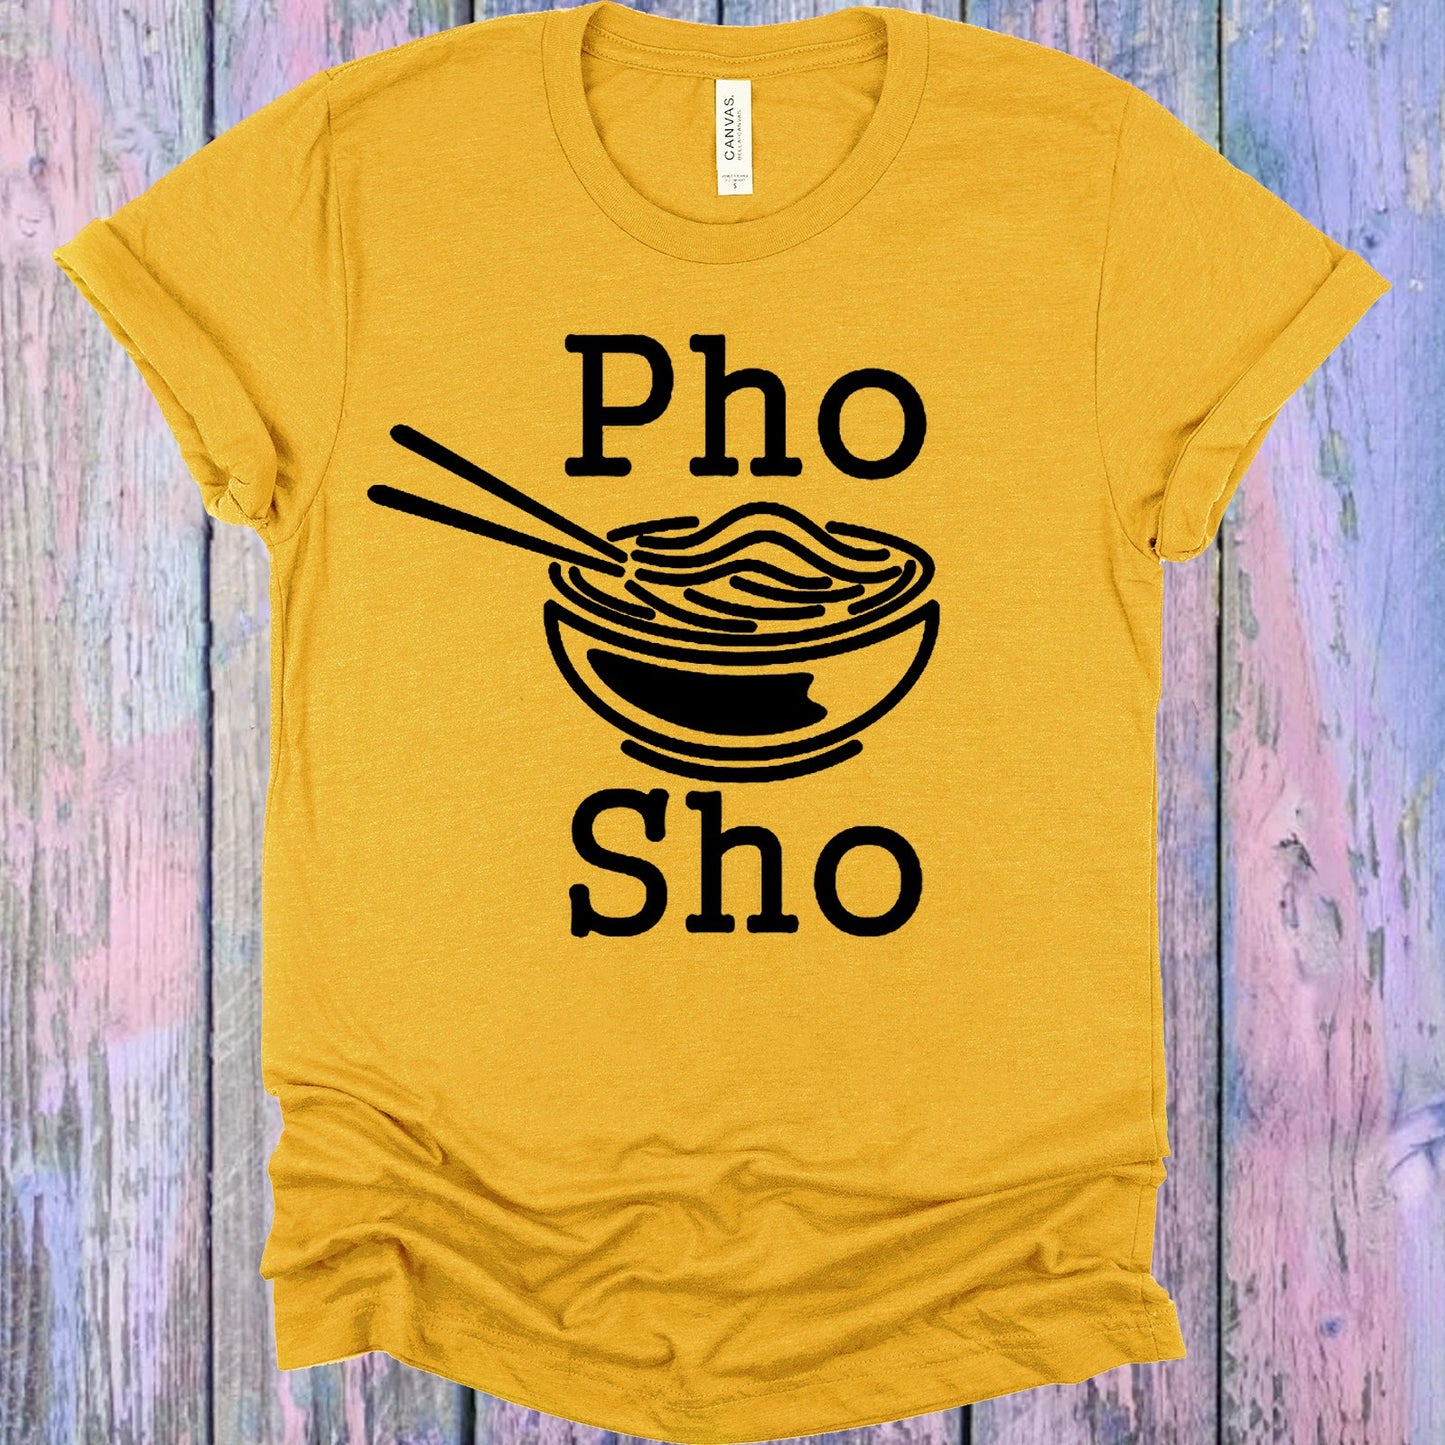 Pho Sho Graphic Tee Graphic Tee